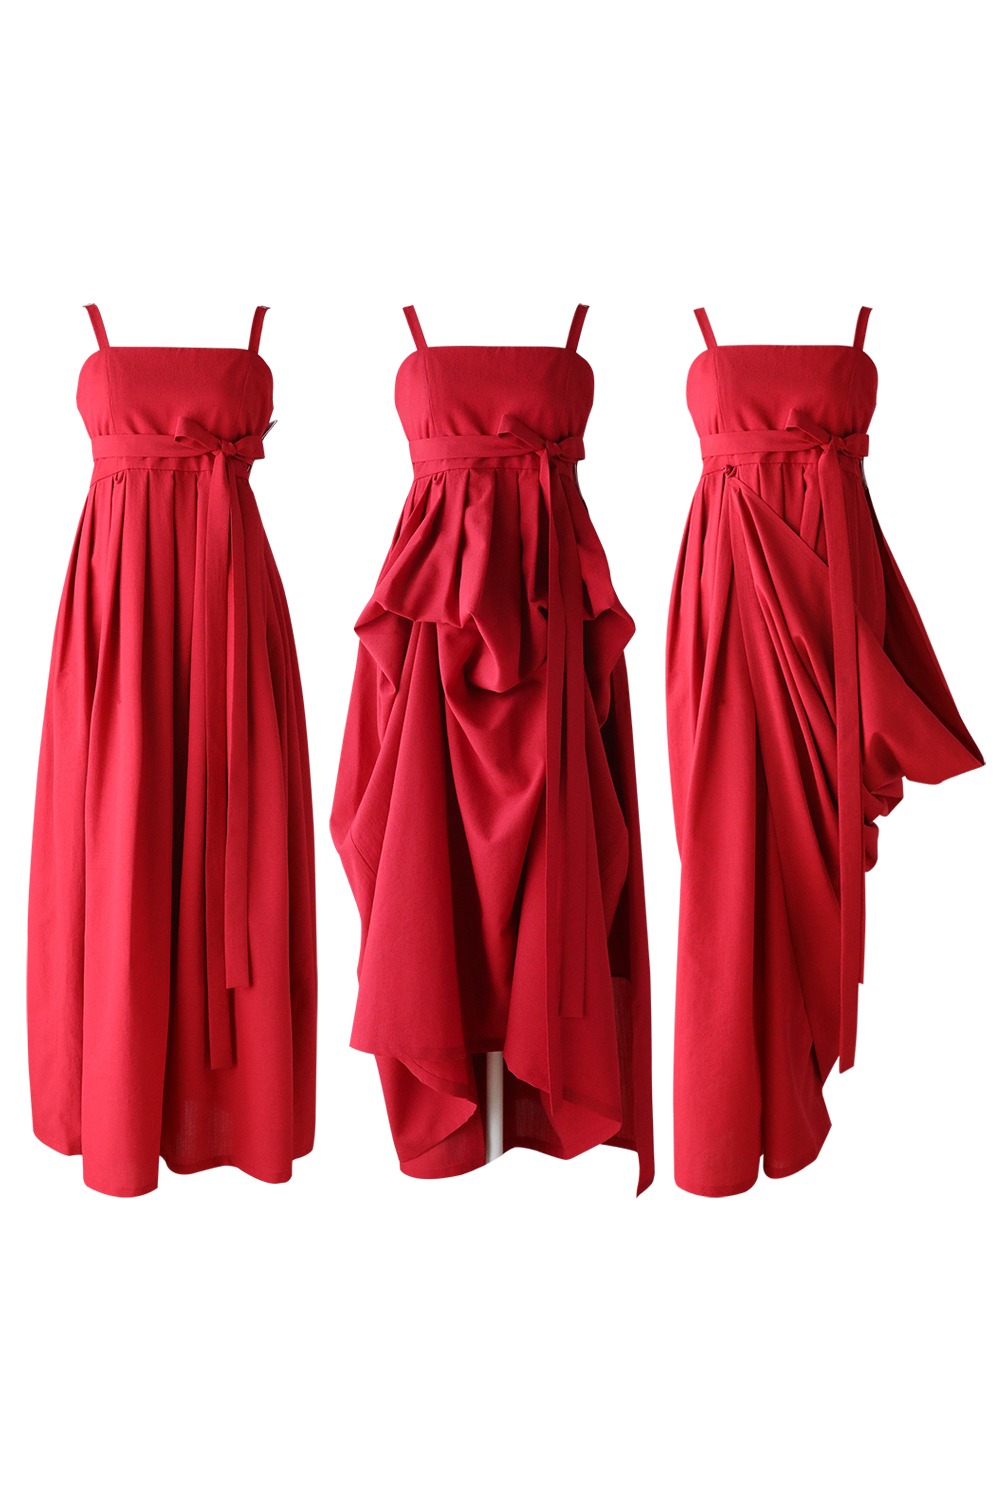 3WAY four seasons Hem Skirt [Red]